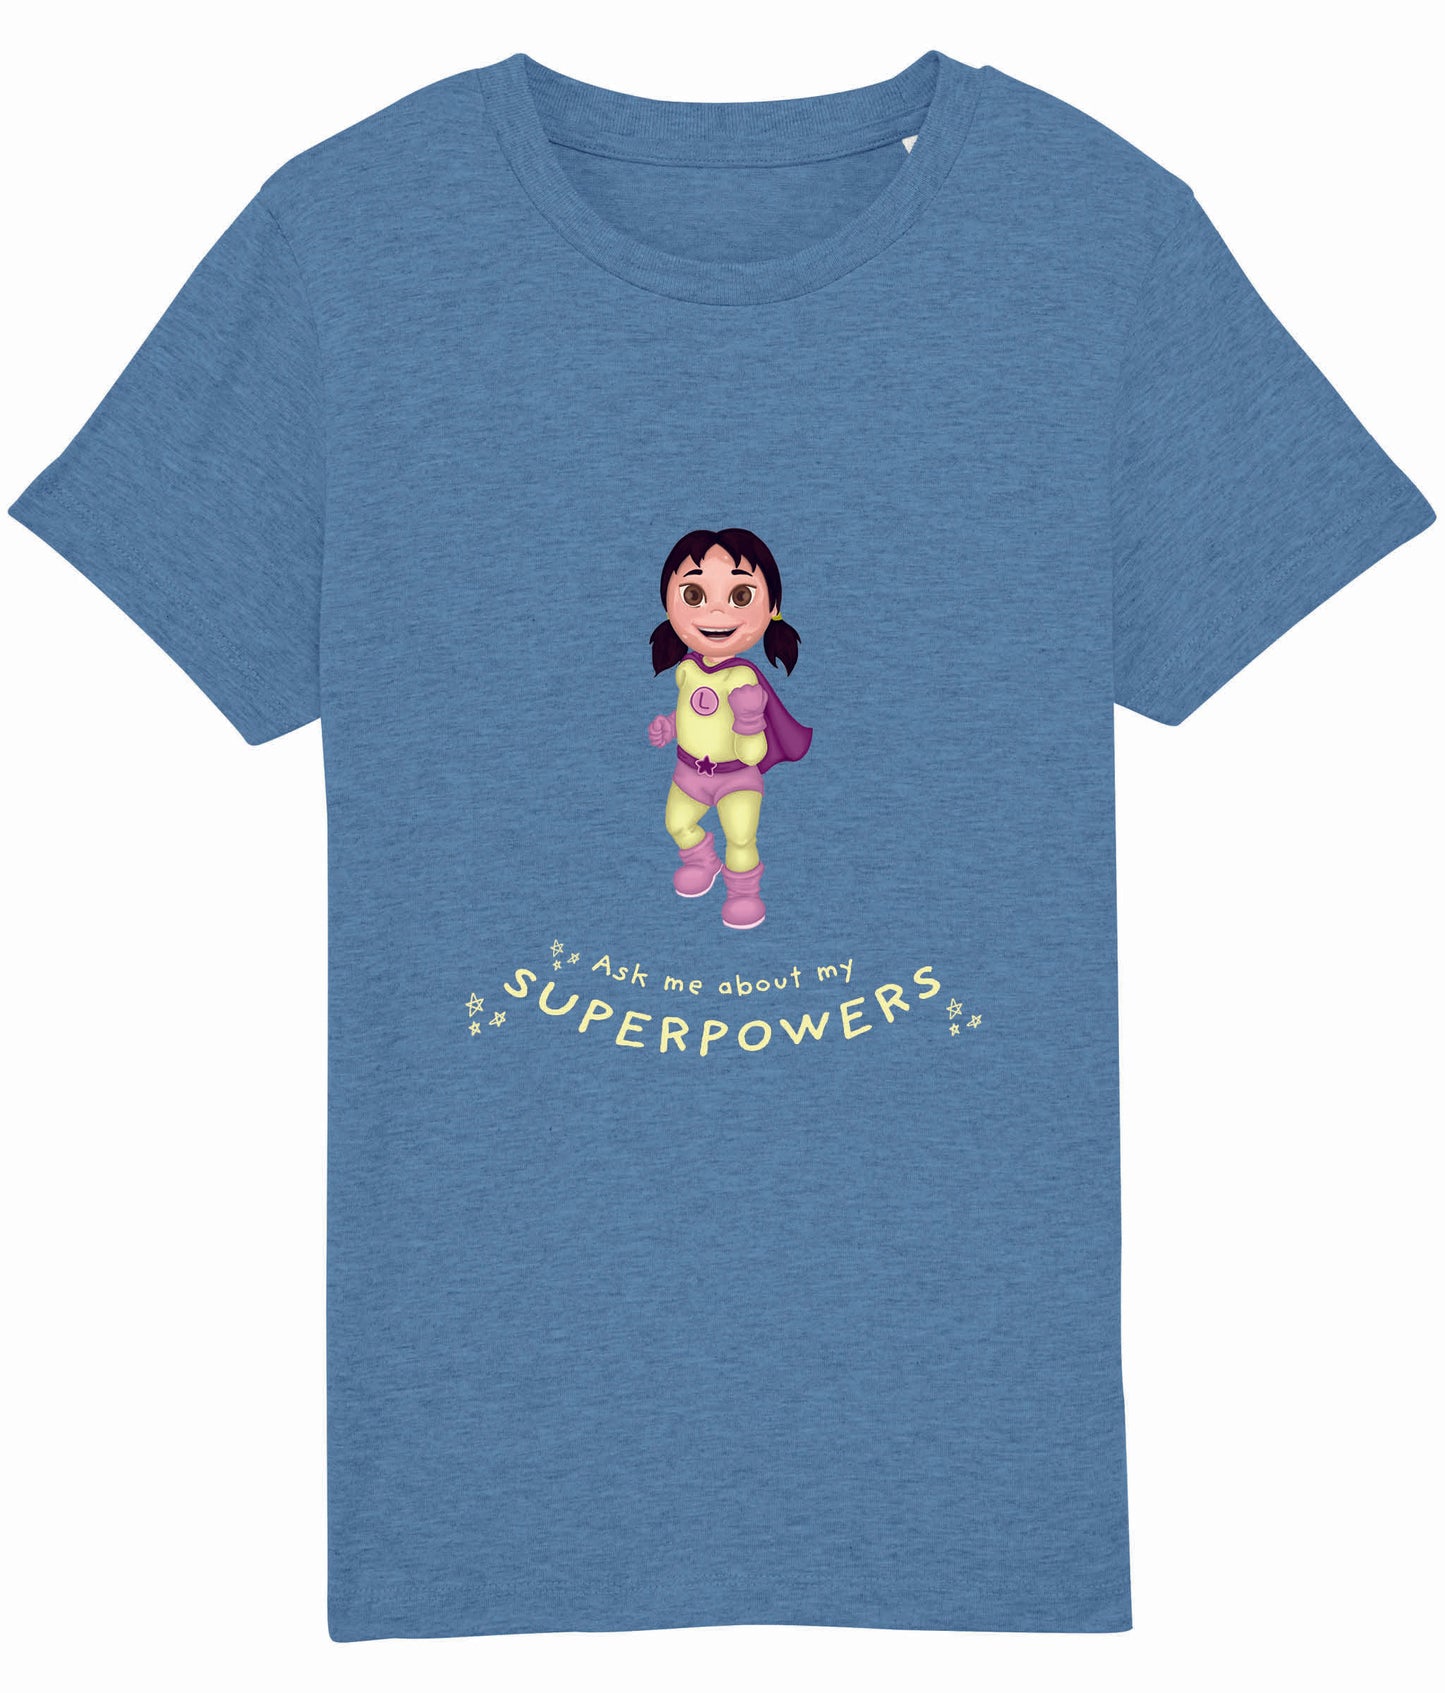 Kids Organic Super Hero T-Shirt - English